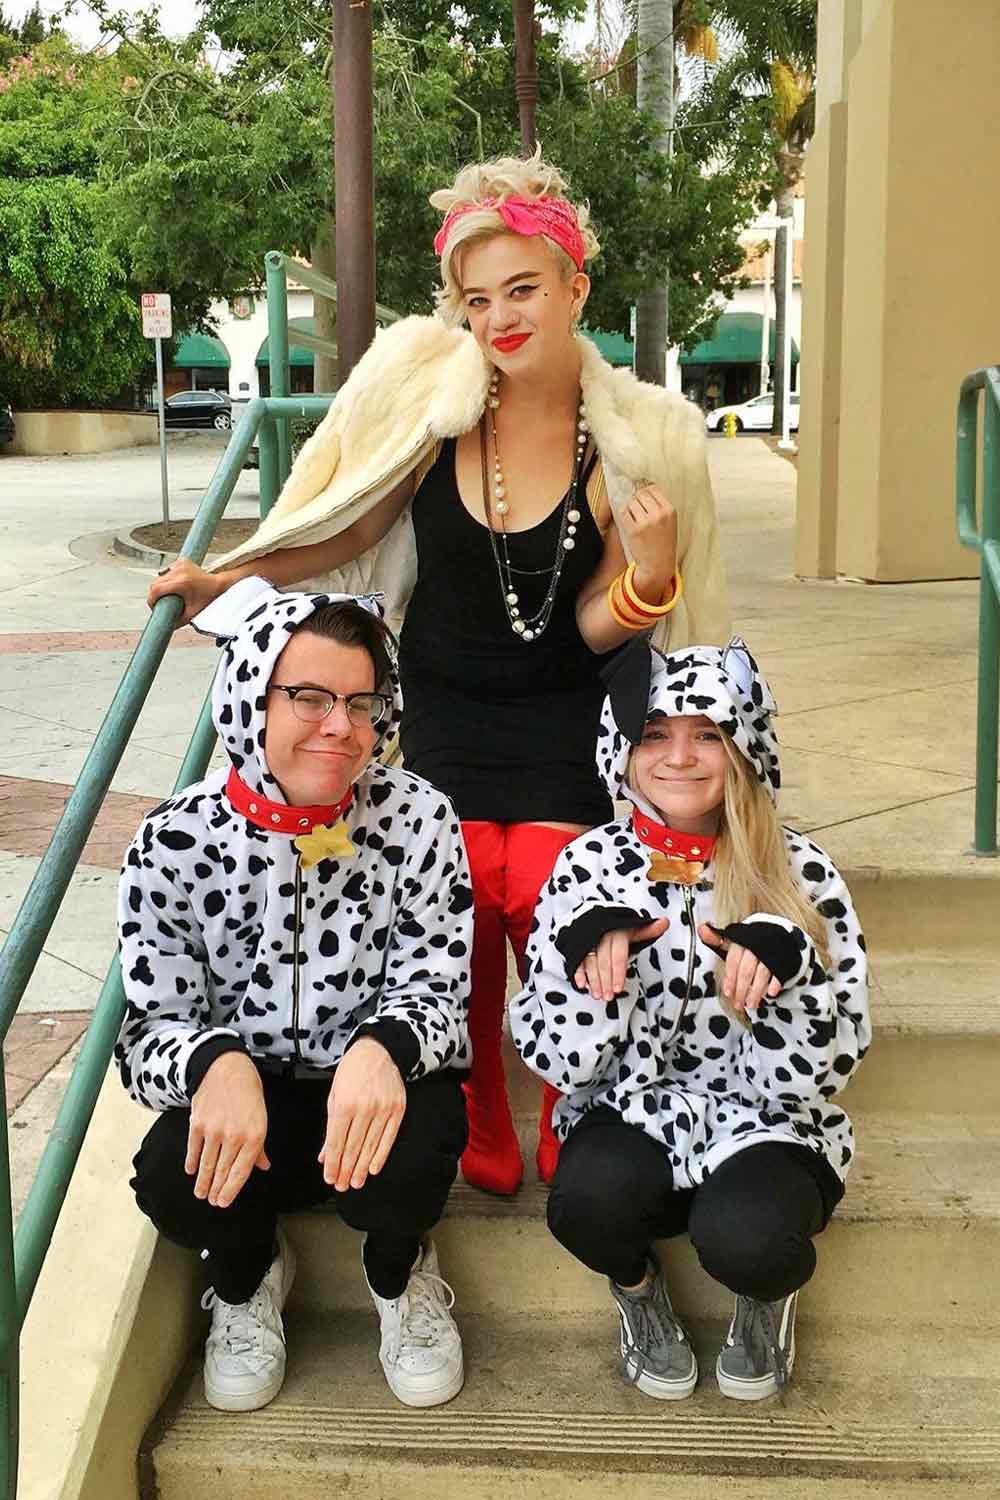 Cruella And Dalmatians Funny Halloween Costumes for Friends